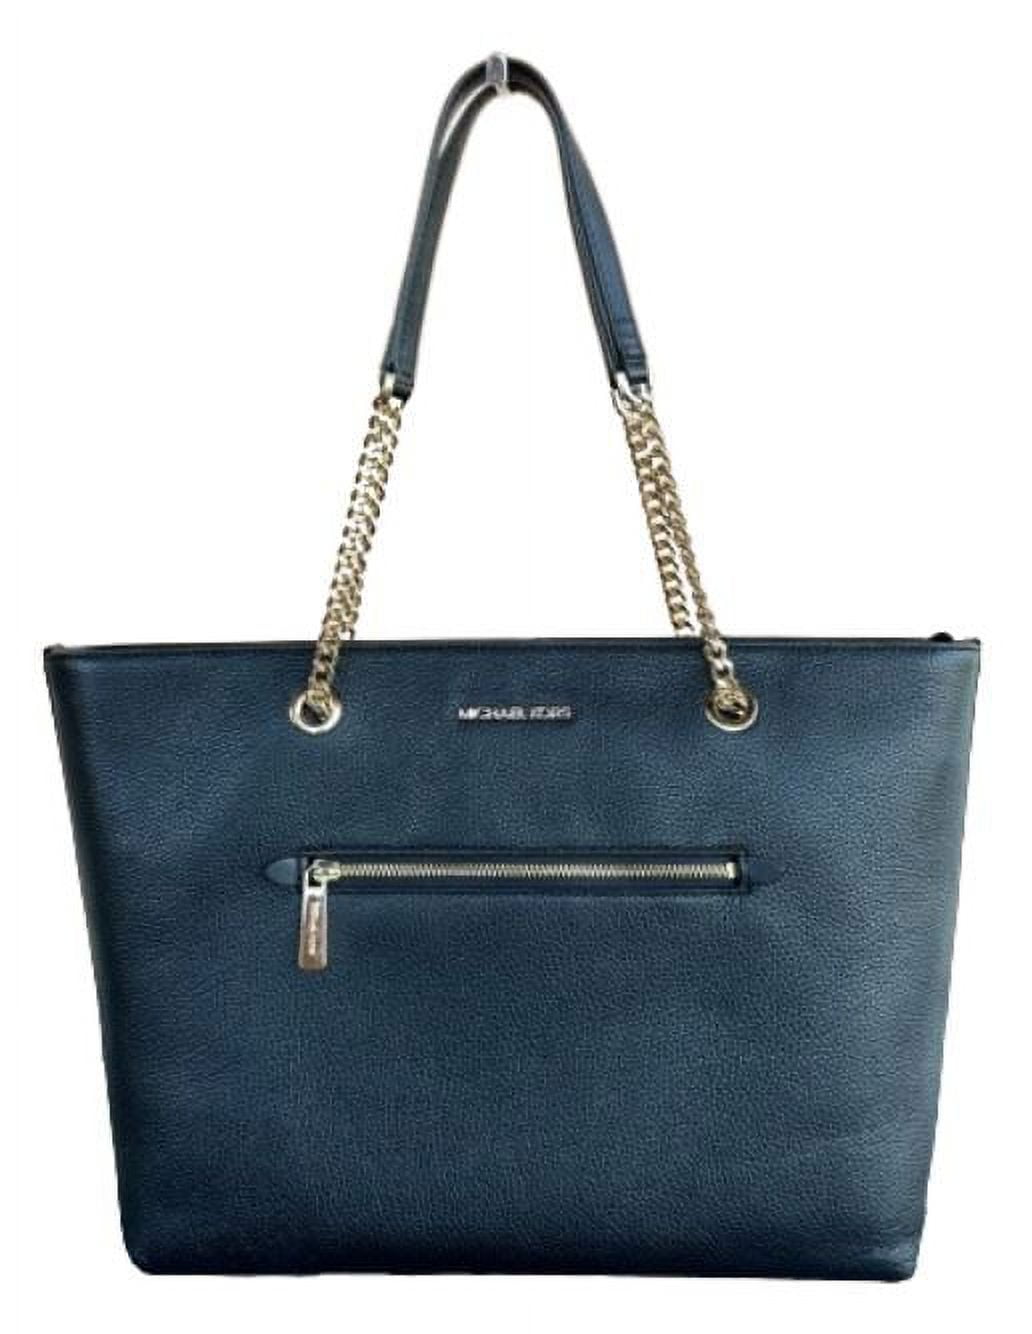 Michael Kors Charlotte Solid Black Leather Large Top Zip Tote Handbag Bag  Black | eBay